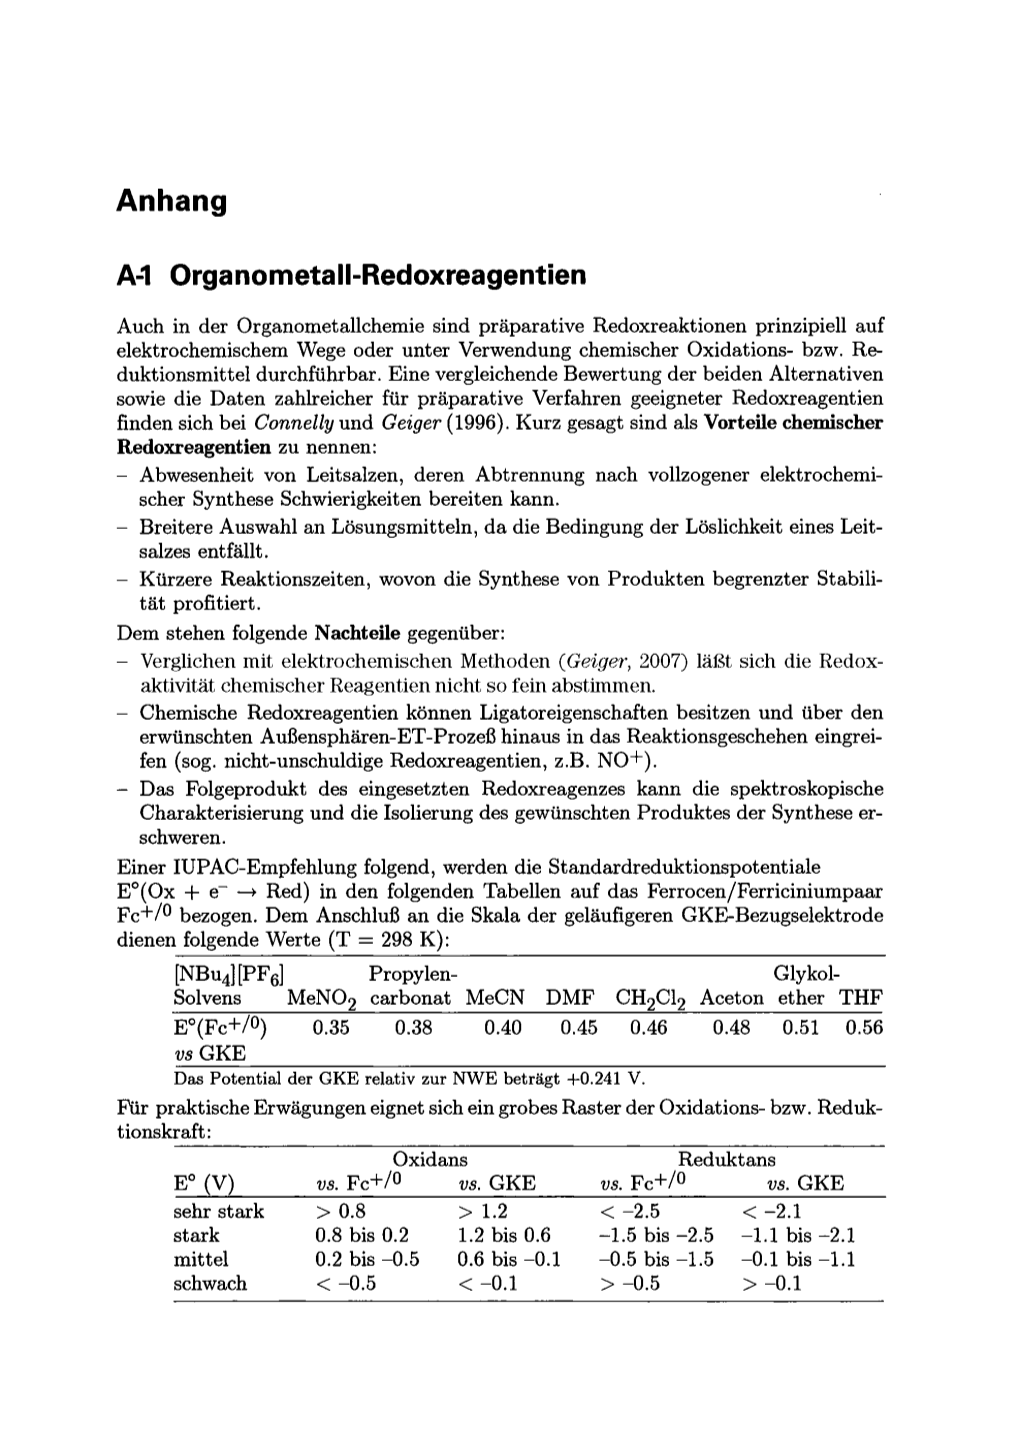 Anhang A-10Rganometali-Redoxreagentien